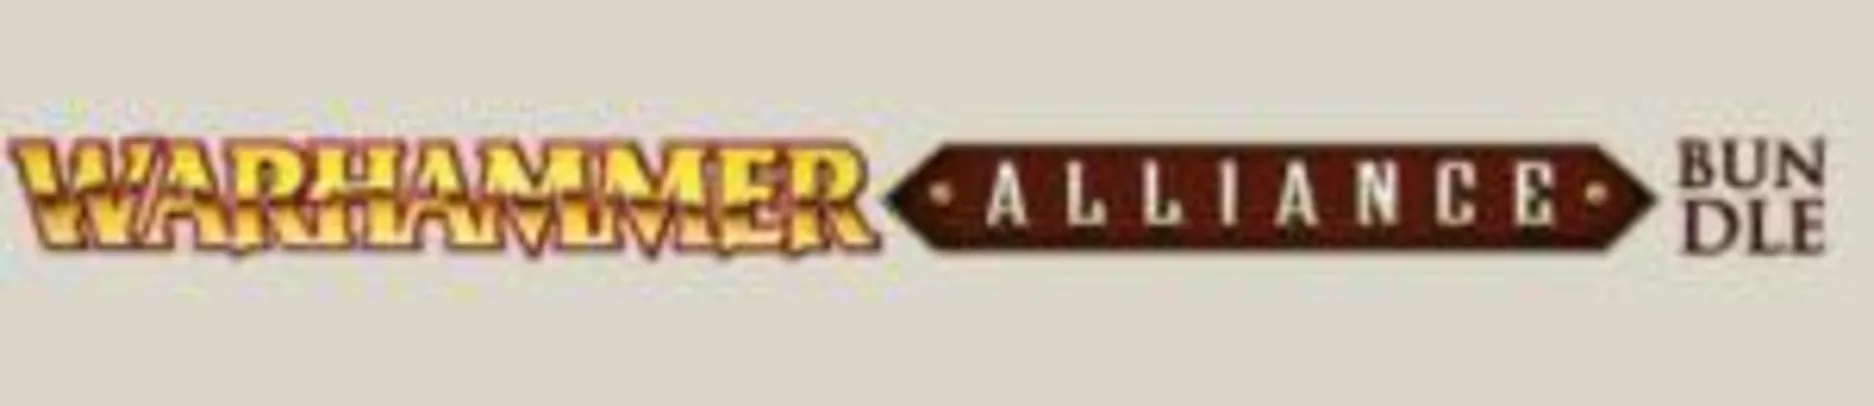 Warhammer Alliance Bundle - a partir de R$ 3